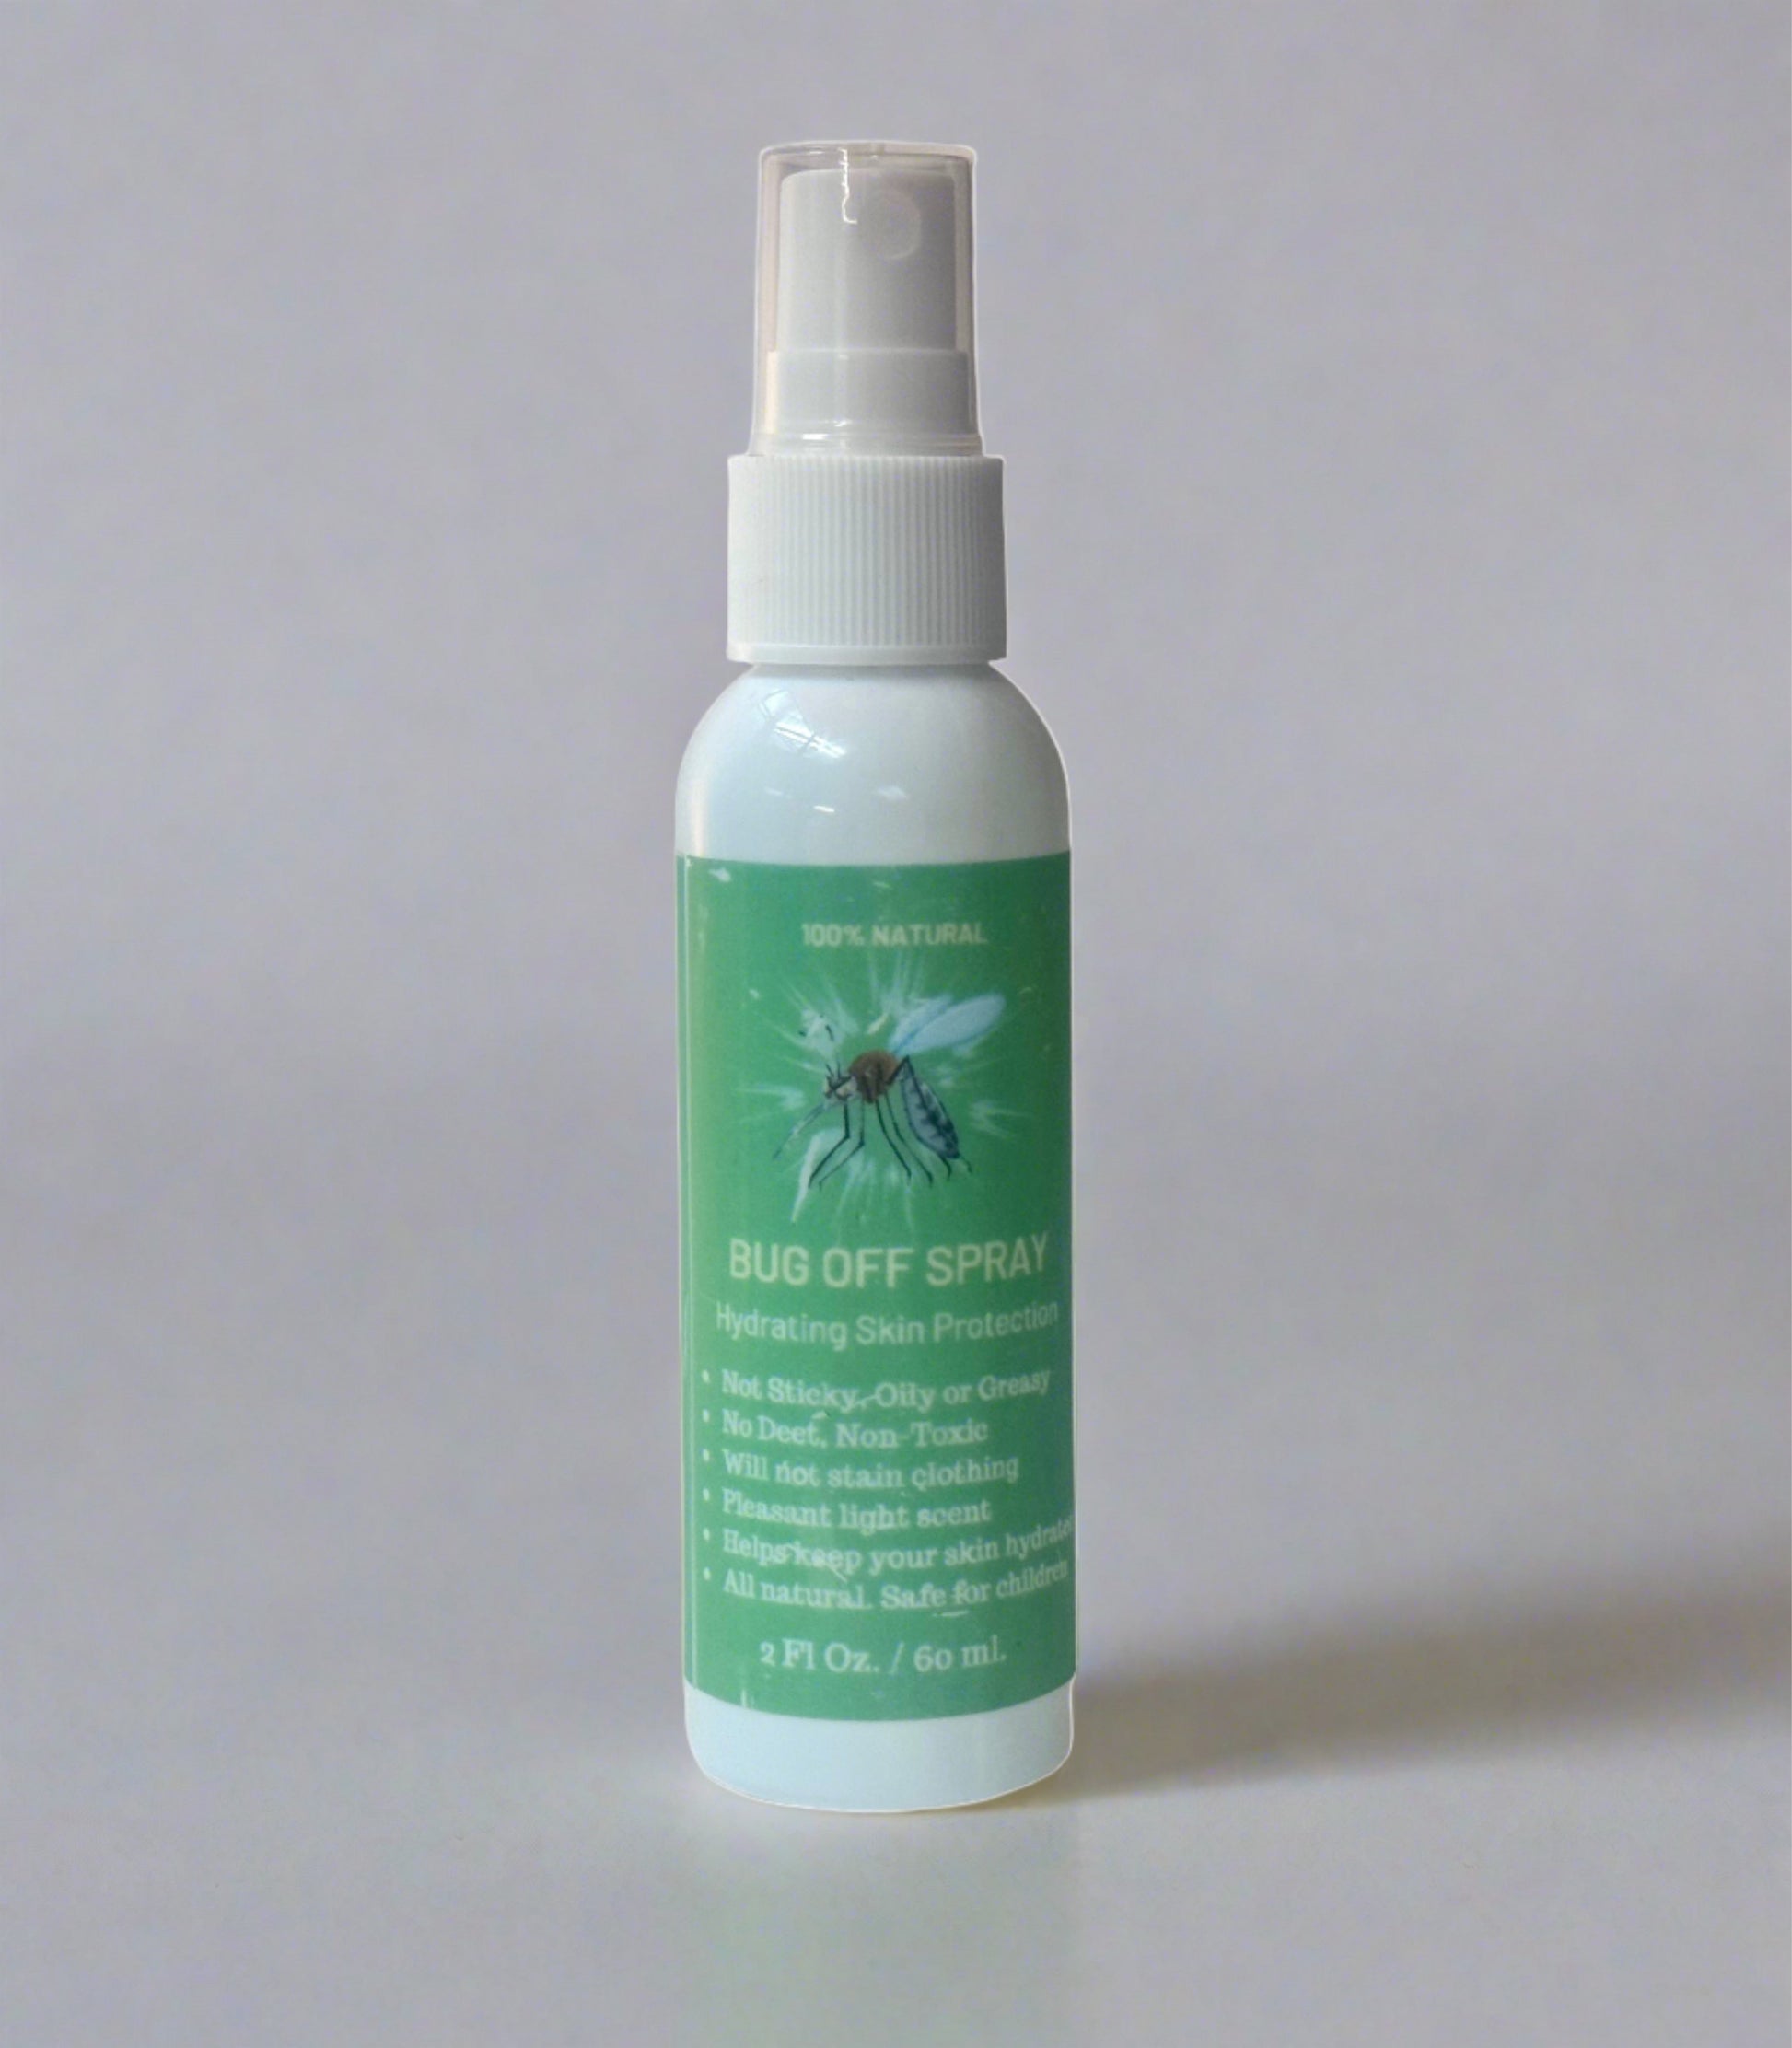 Bug off natural bug repellent by naked mermaid soapery llc.  Skin safe